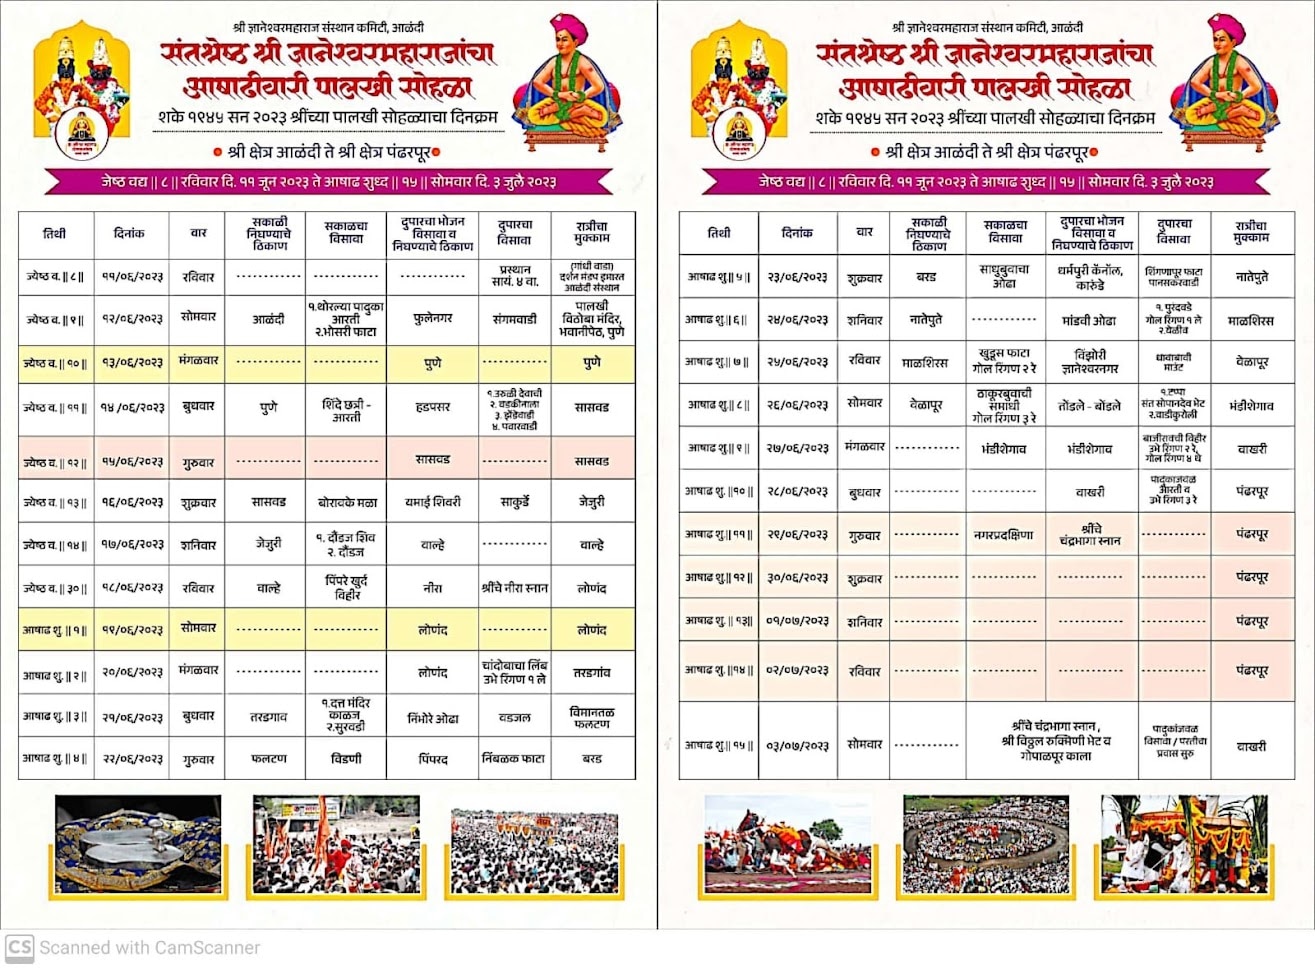 ashadhi wari 2023 Dyaneshwar Mauli alandi Tukaram maharaj dehu Palkhi timw table and dates announced